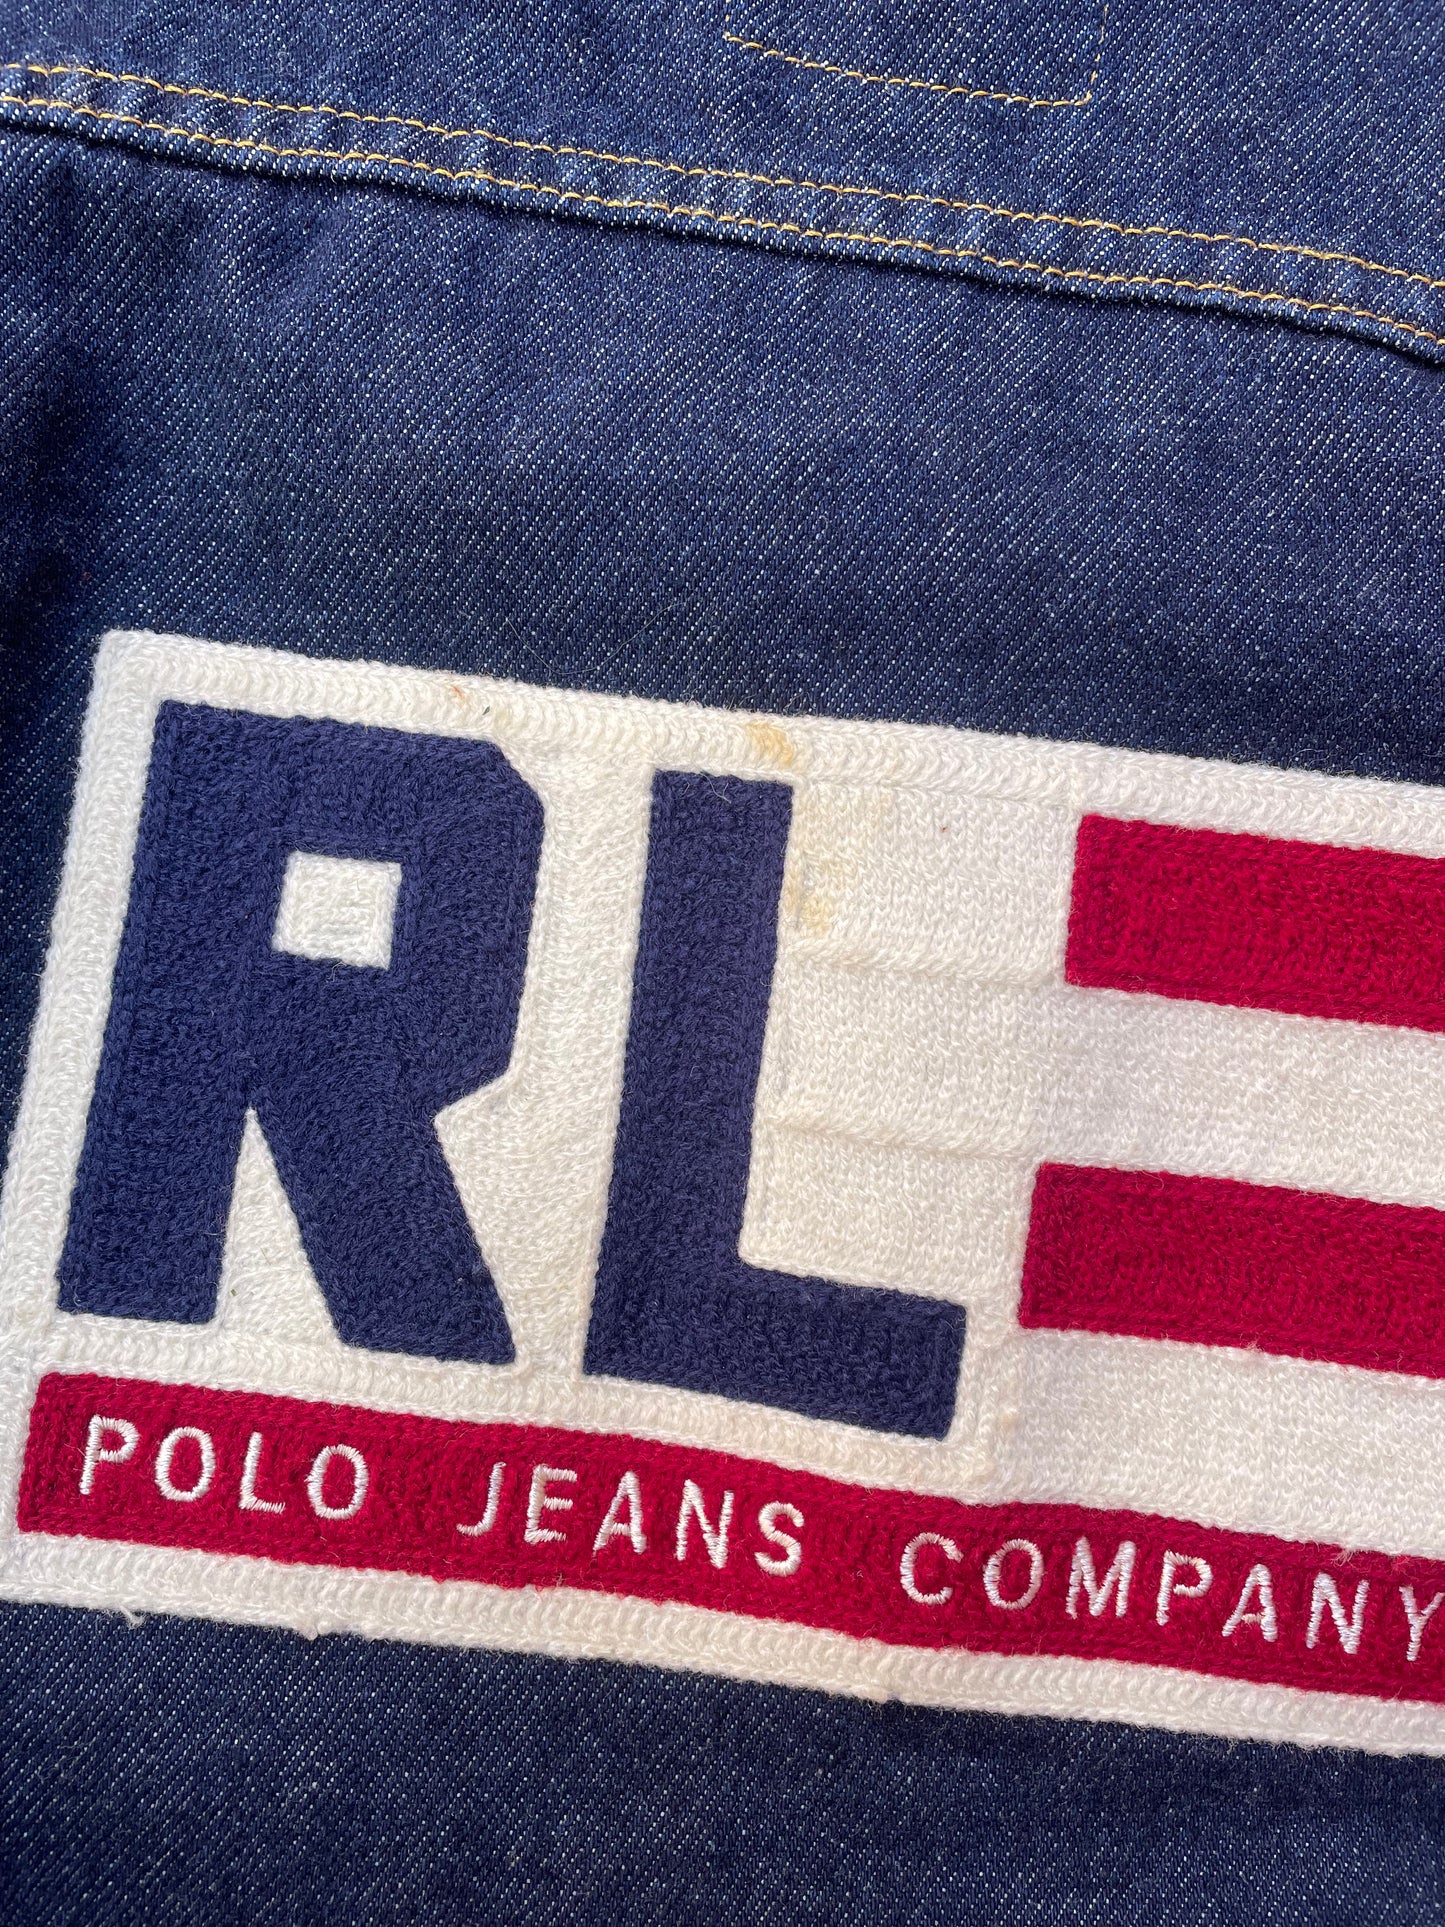 2000's Polo Jeans Co. by Ralph Lauren Patch Logo Denim Jacket - M